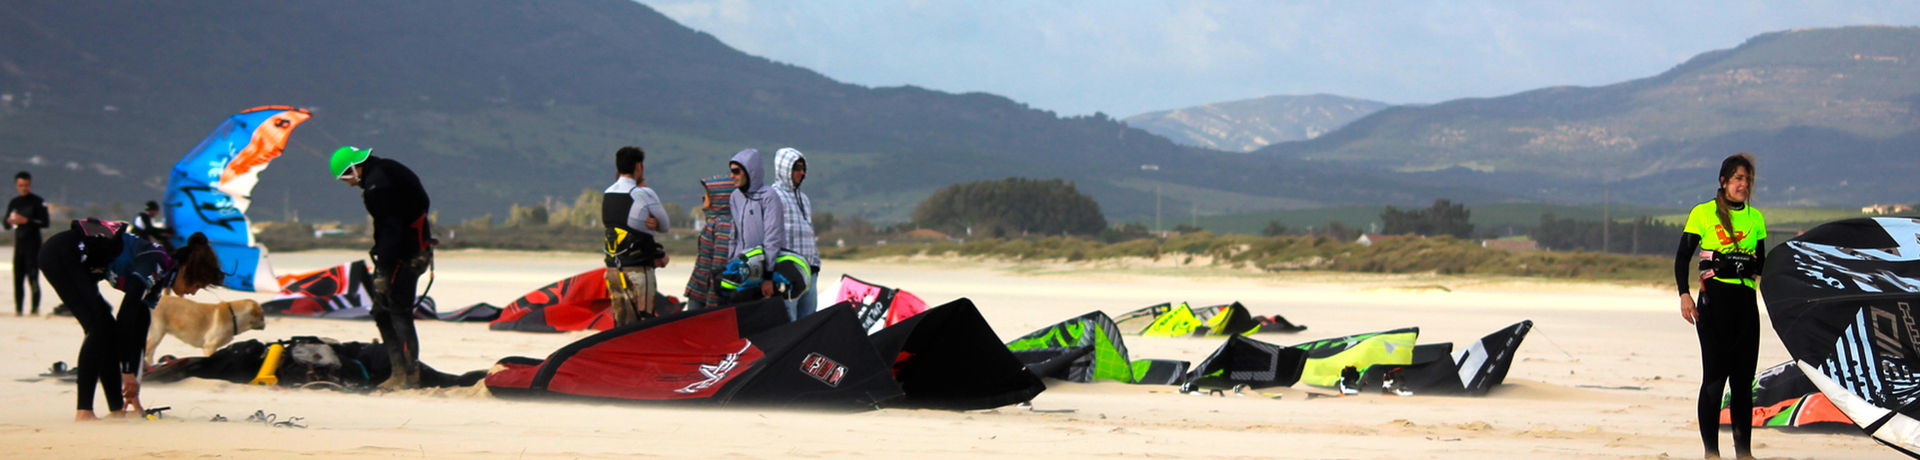 Kitesurfing lessons advanced in Tarifa - 9 or 12 hours